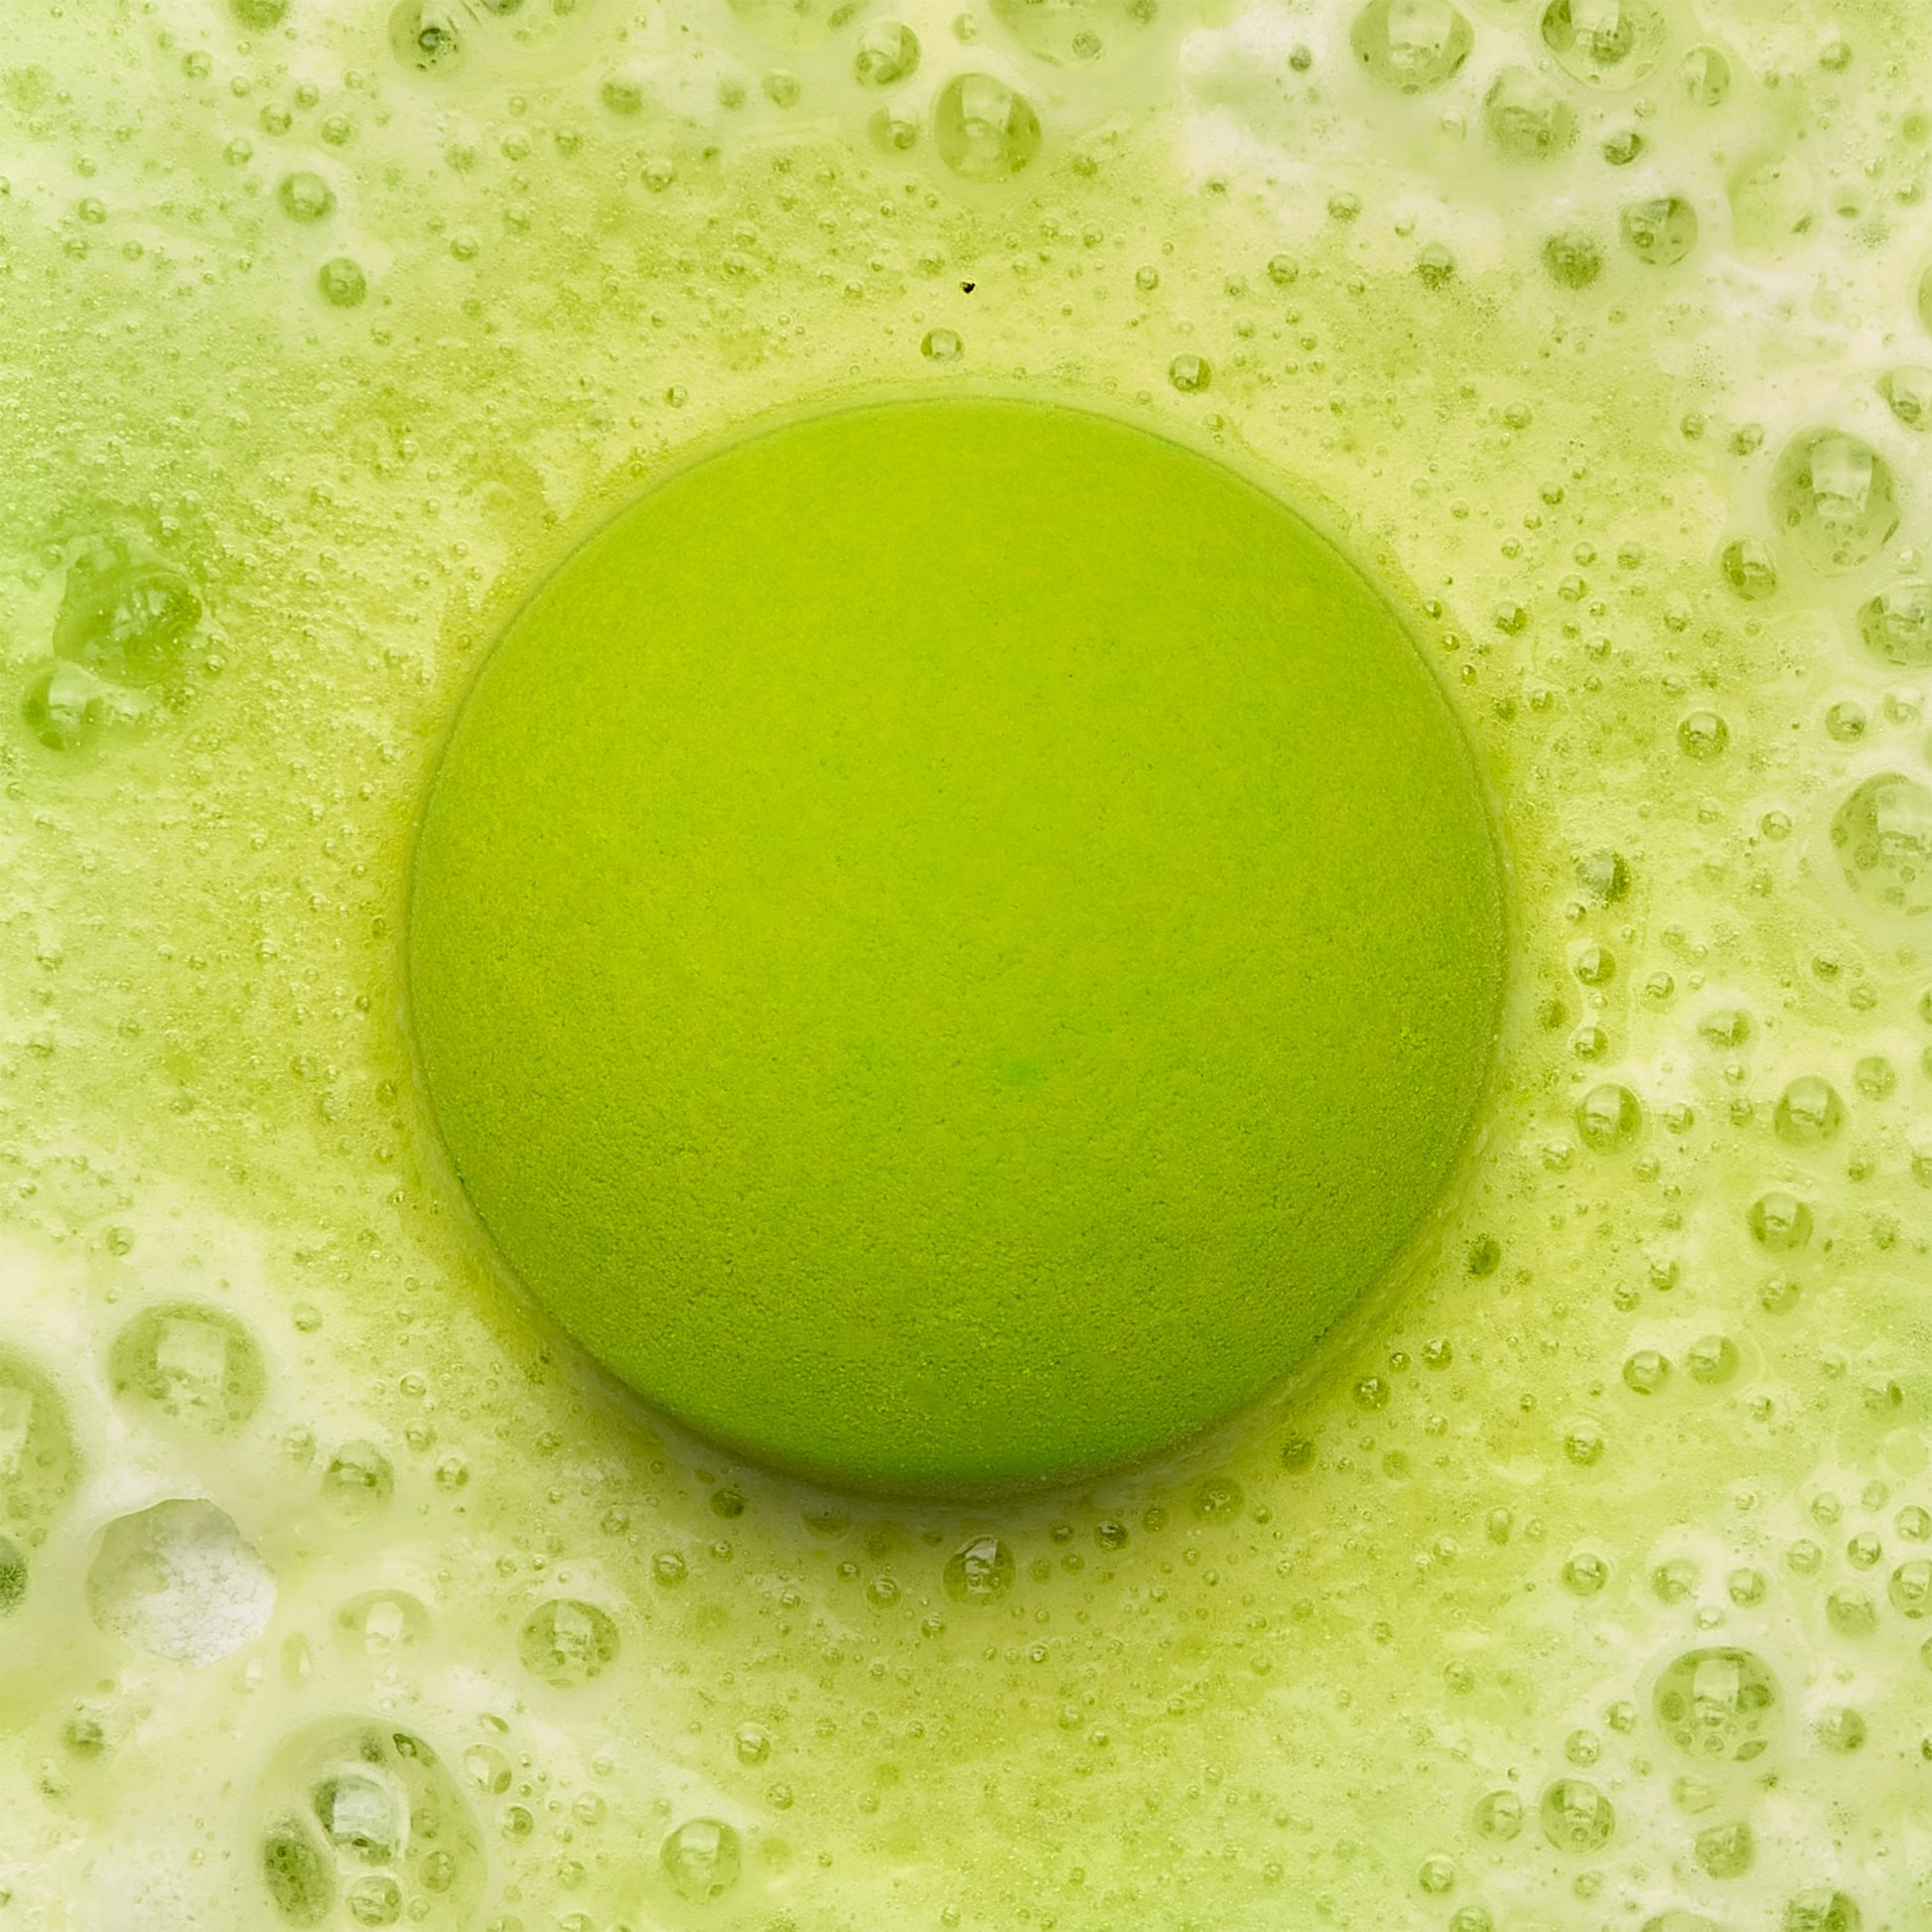 a green fizzing bath bomb in green water